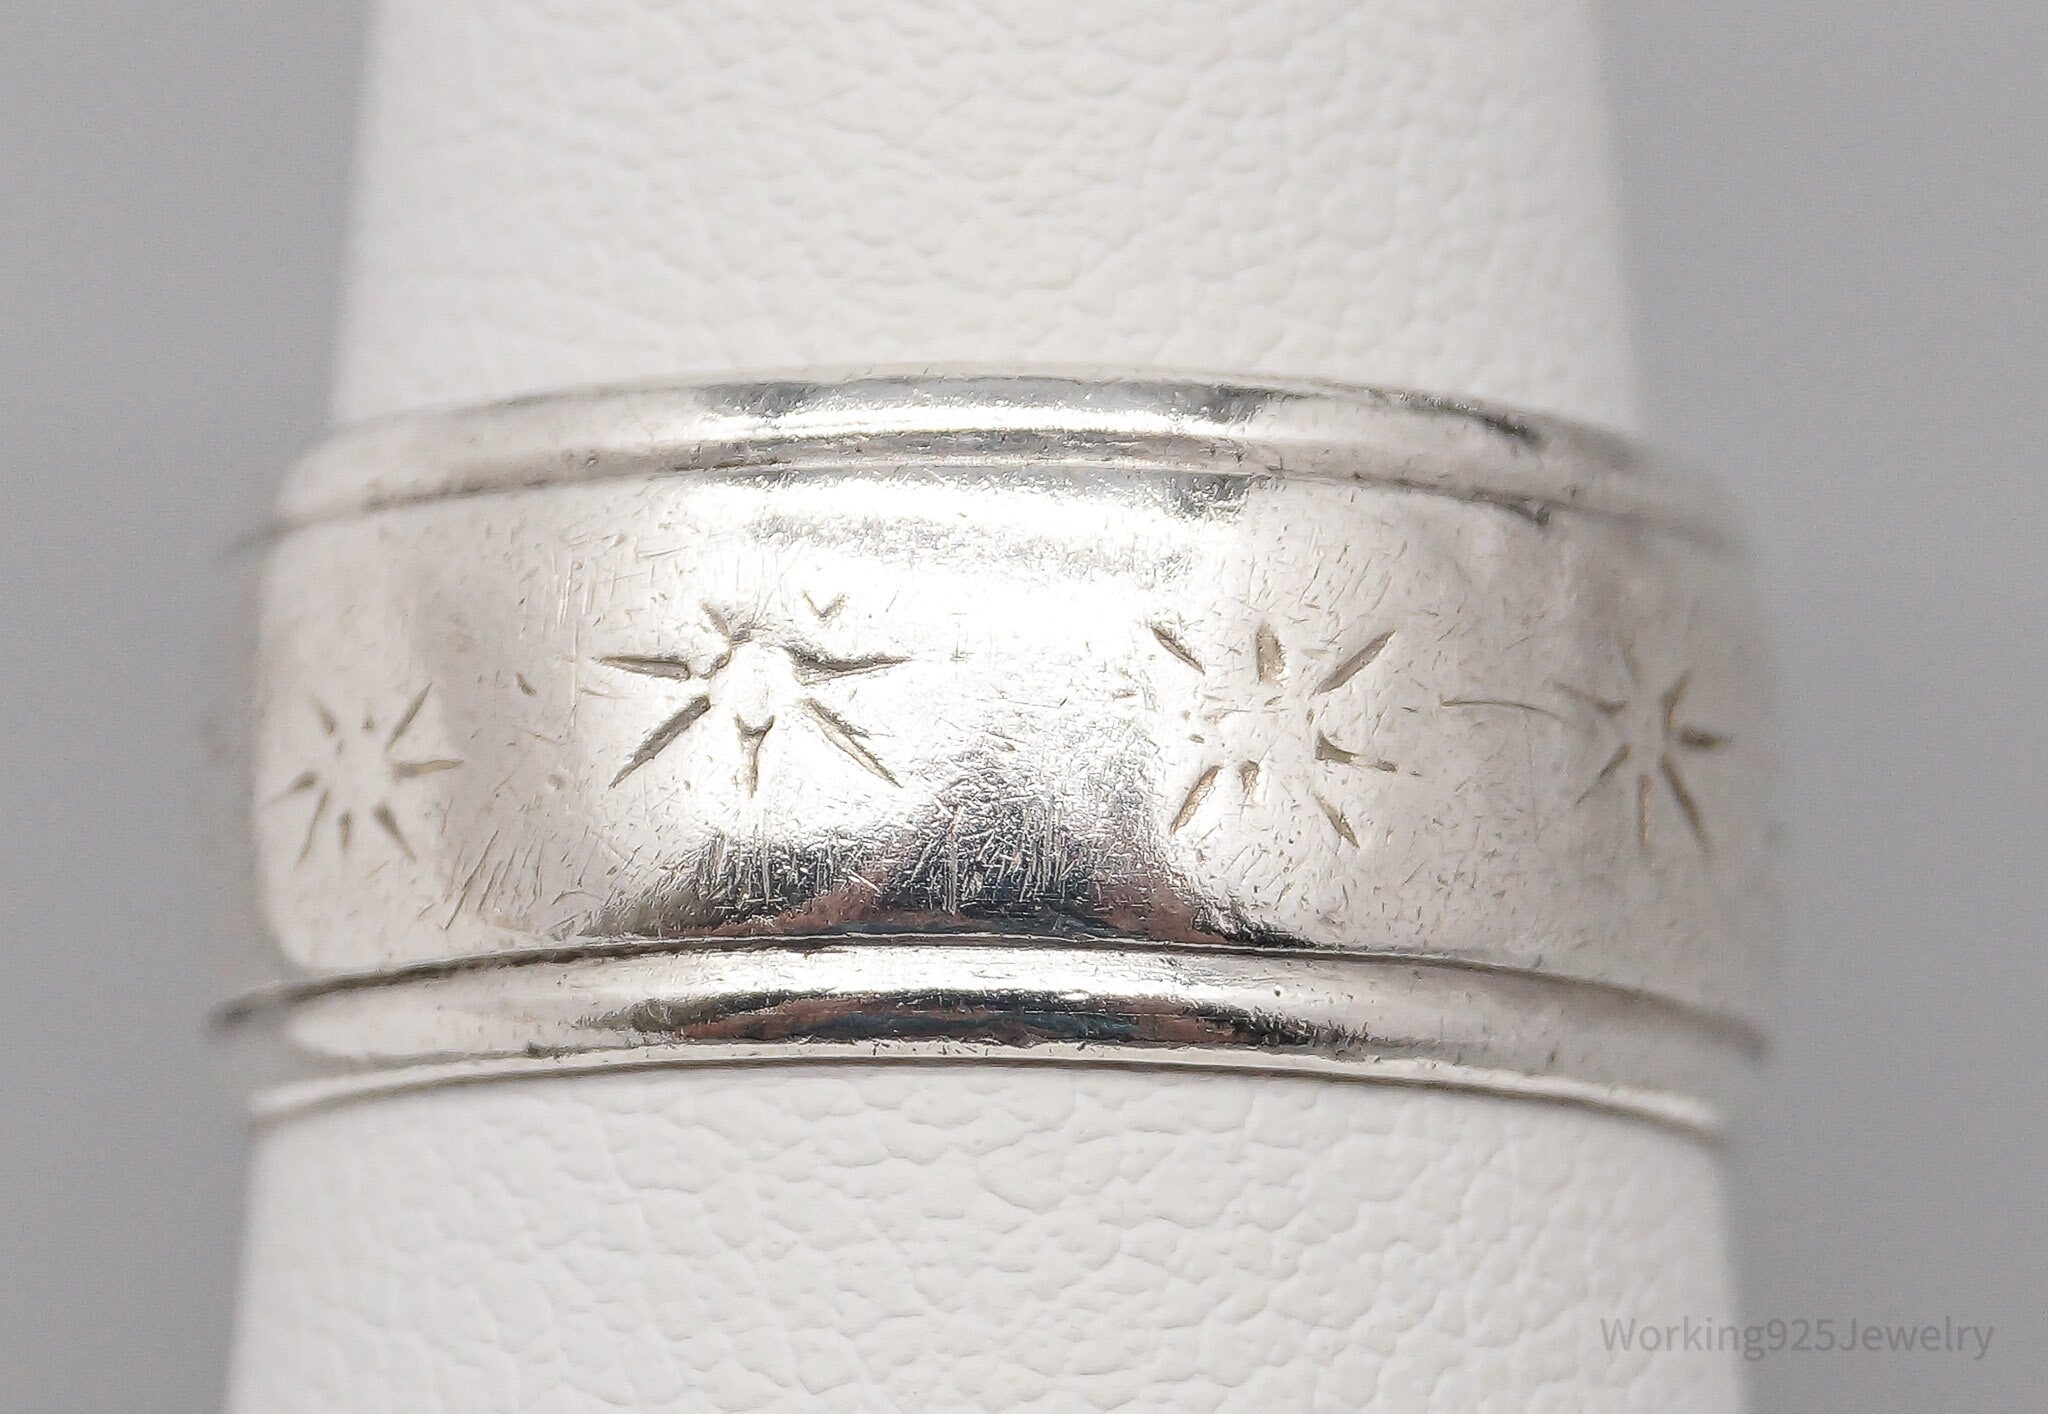 Antique Sun Starburst Design Sterling Silver Band Ring - Size 7.25